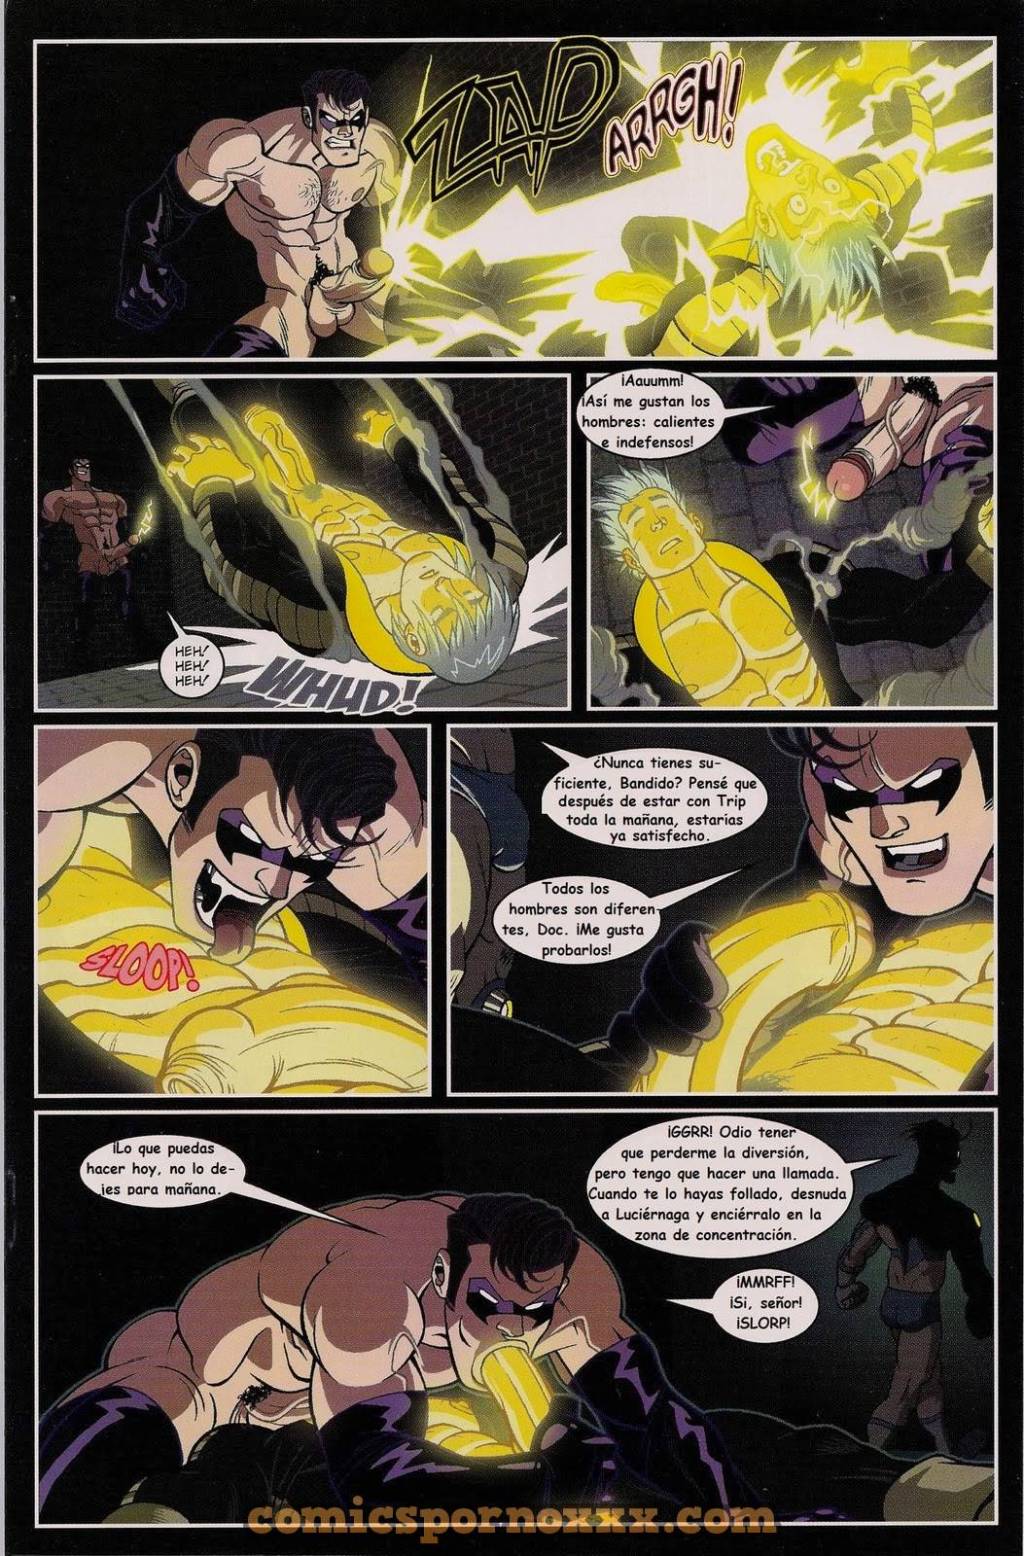 Justicia al Desnudo #2 (Comics de Superhéroes muy Gay) - 12 - Comics Porno - Hentai Manga - Cartoon XXX